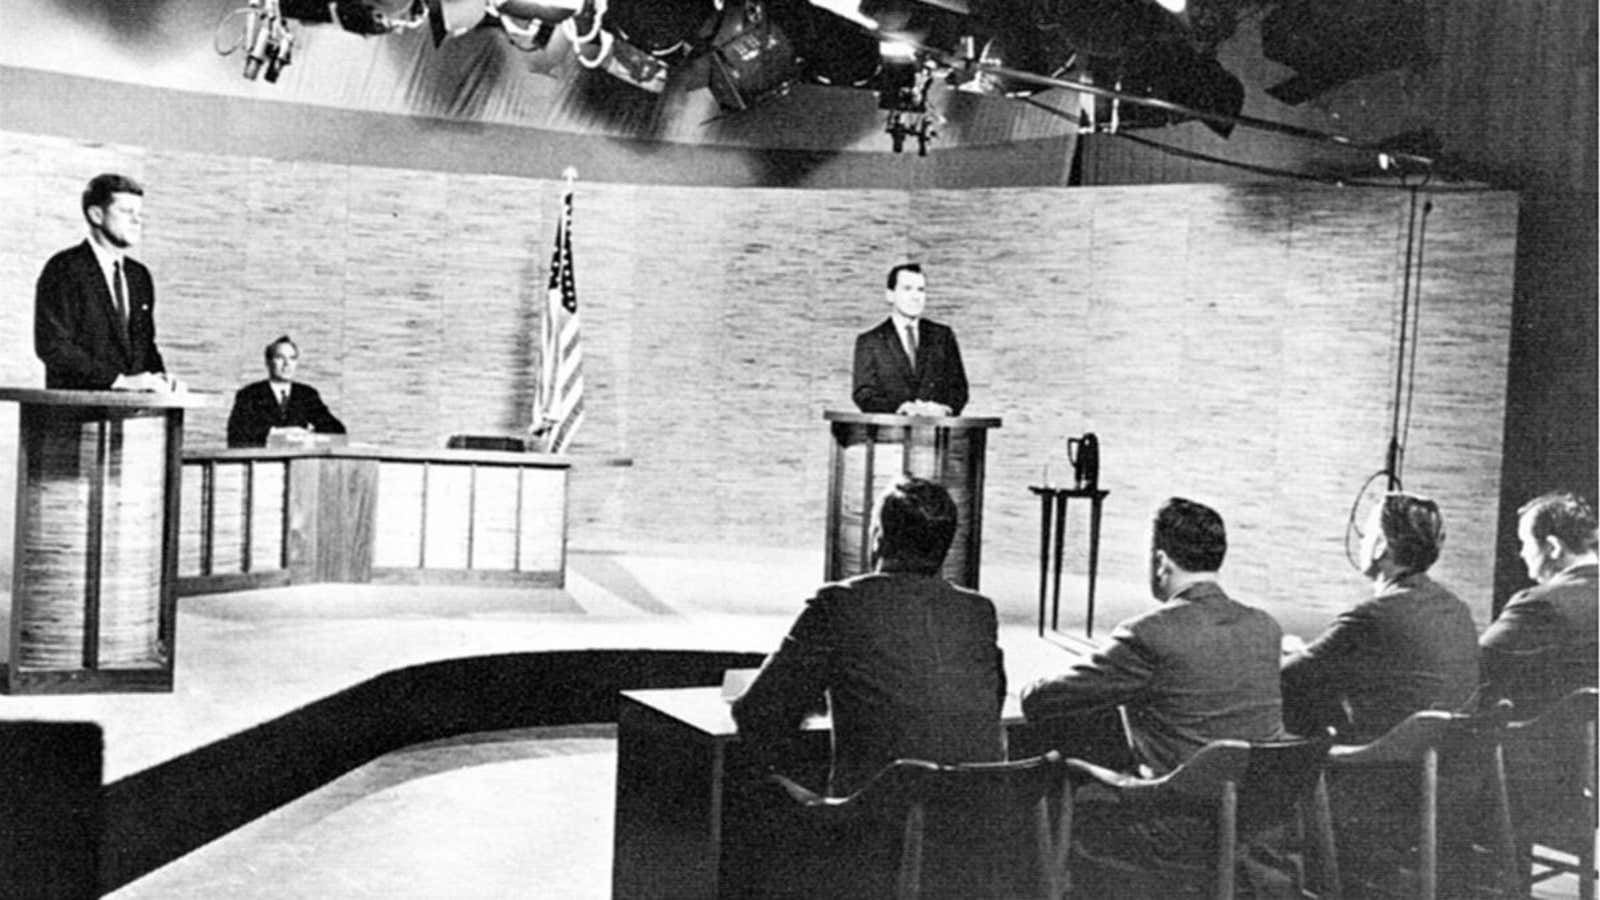 John F Kennedy and Richard Nixon at their televised presidential debate, in 1960.